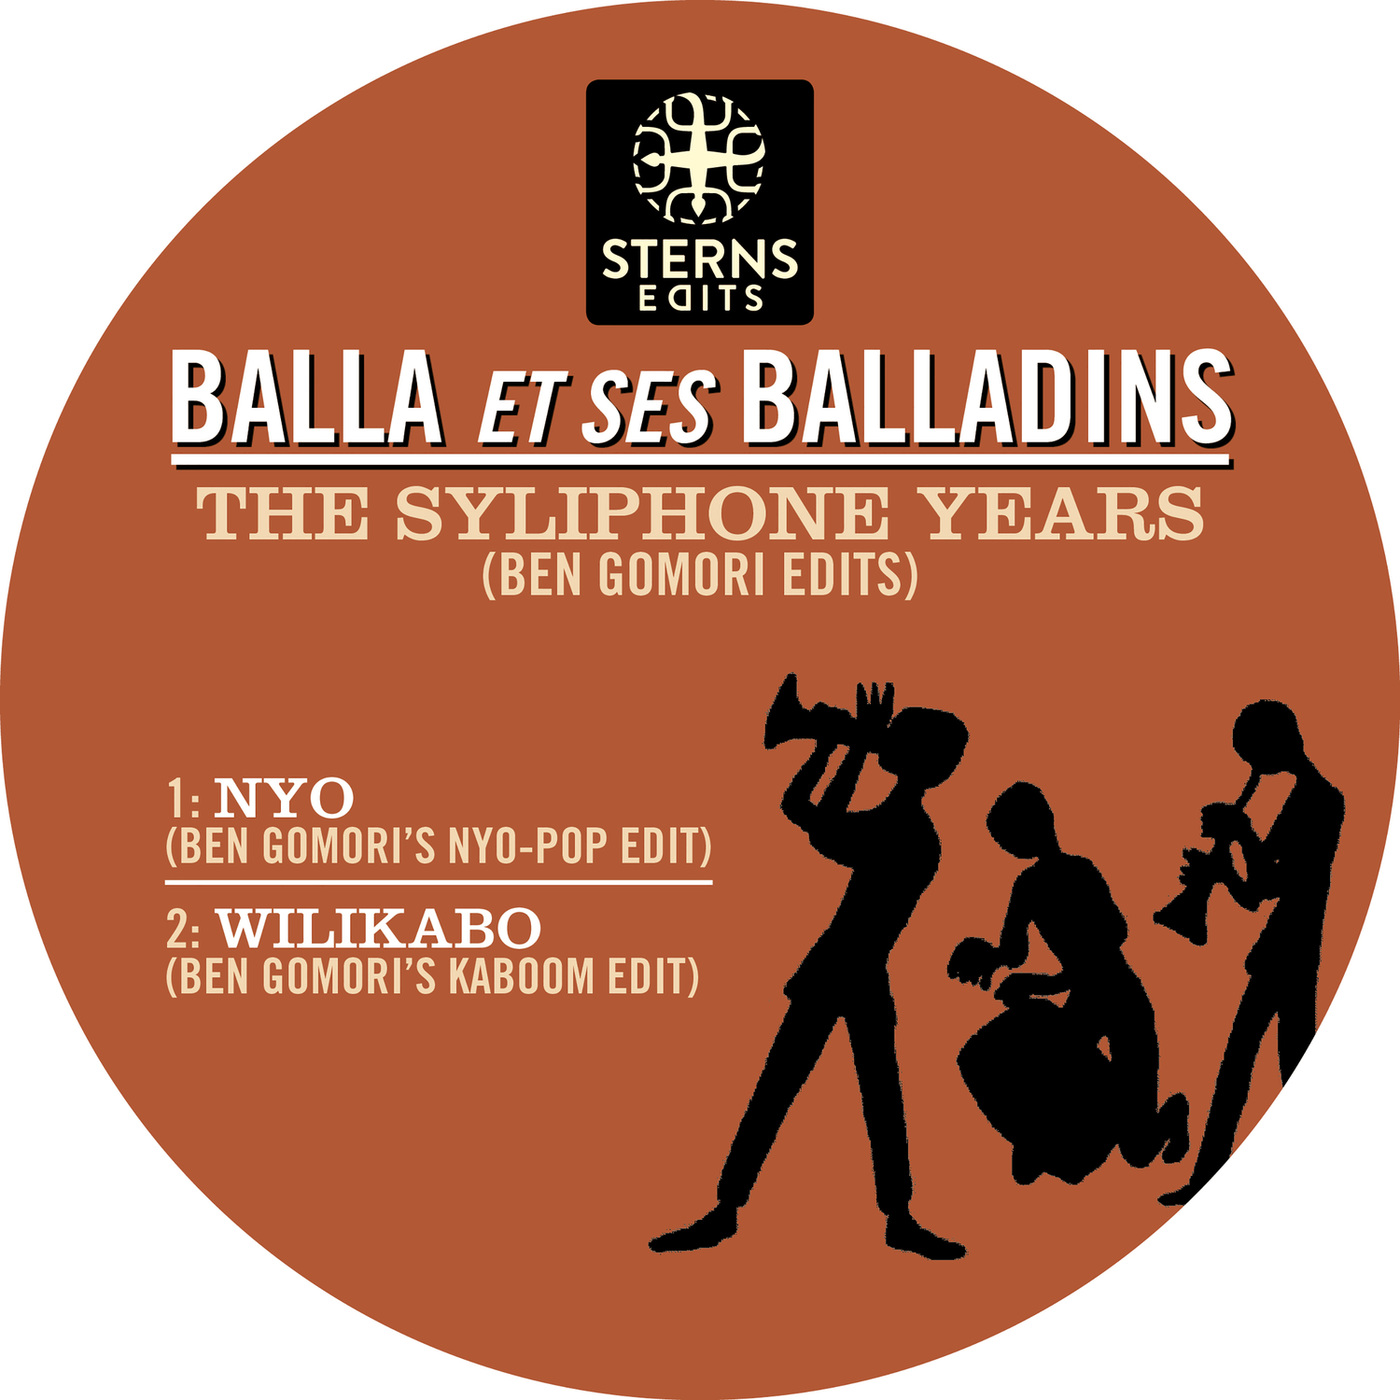 Balla Et Ses Balladins - The Syliphone Years (Ben Gomori Edits) / Sterns Edits